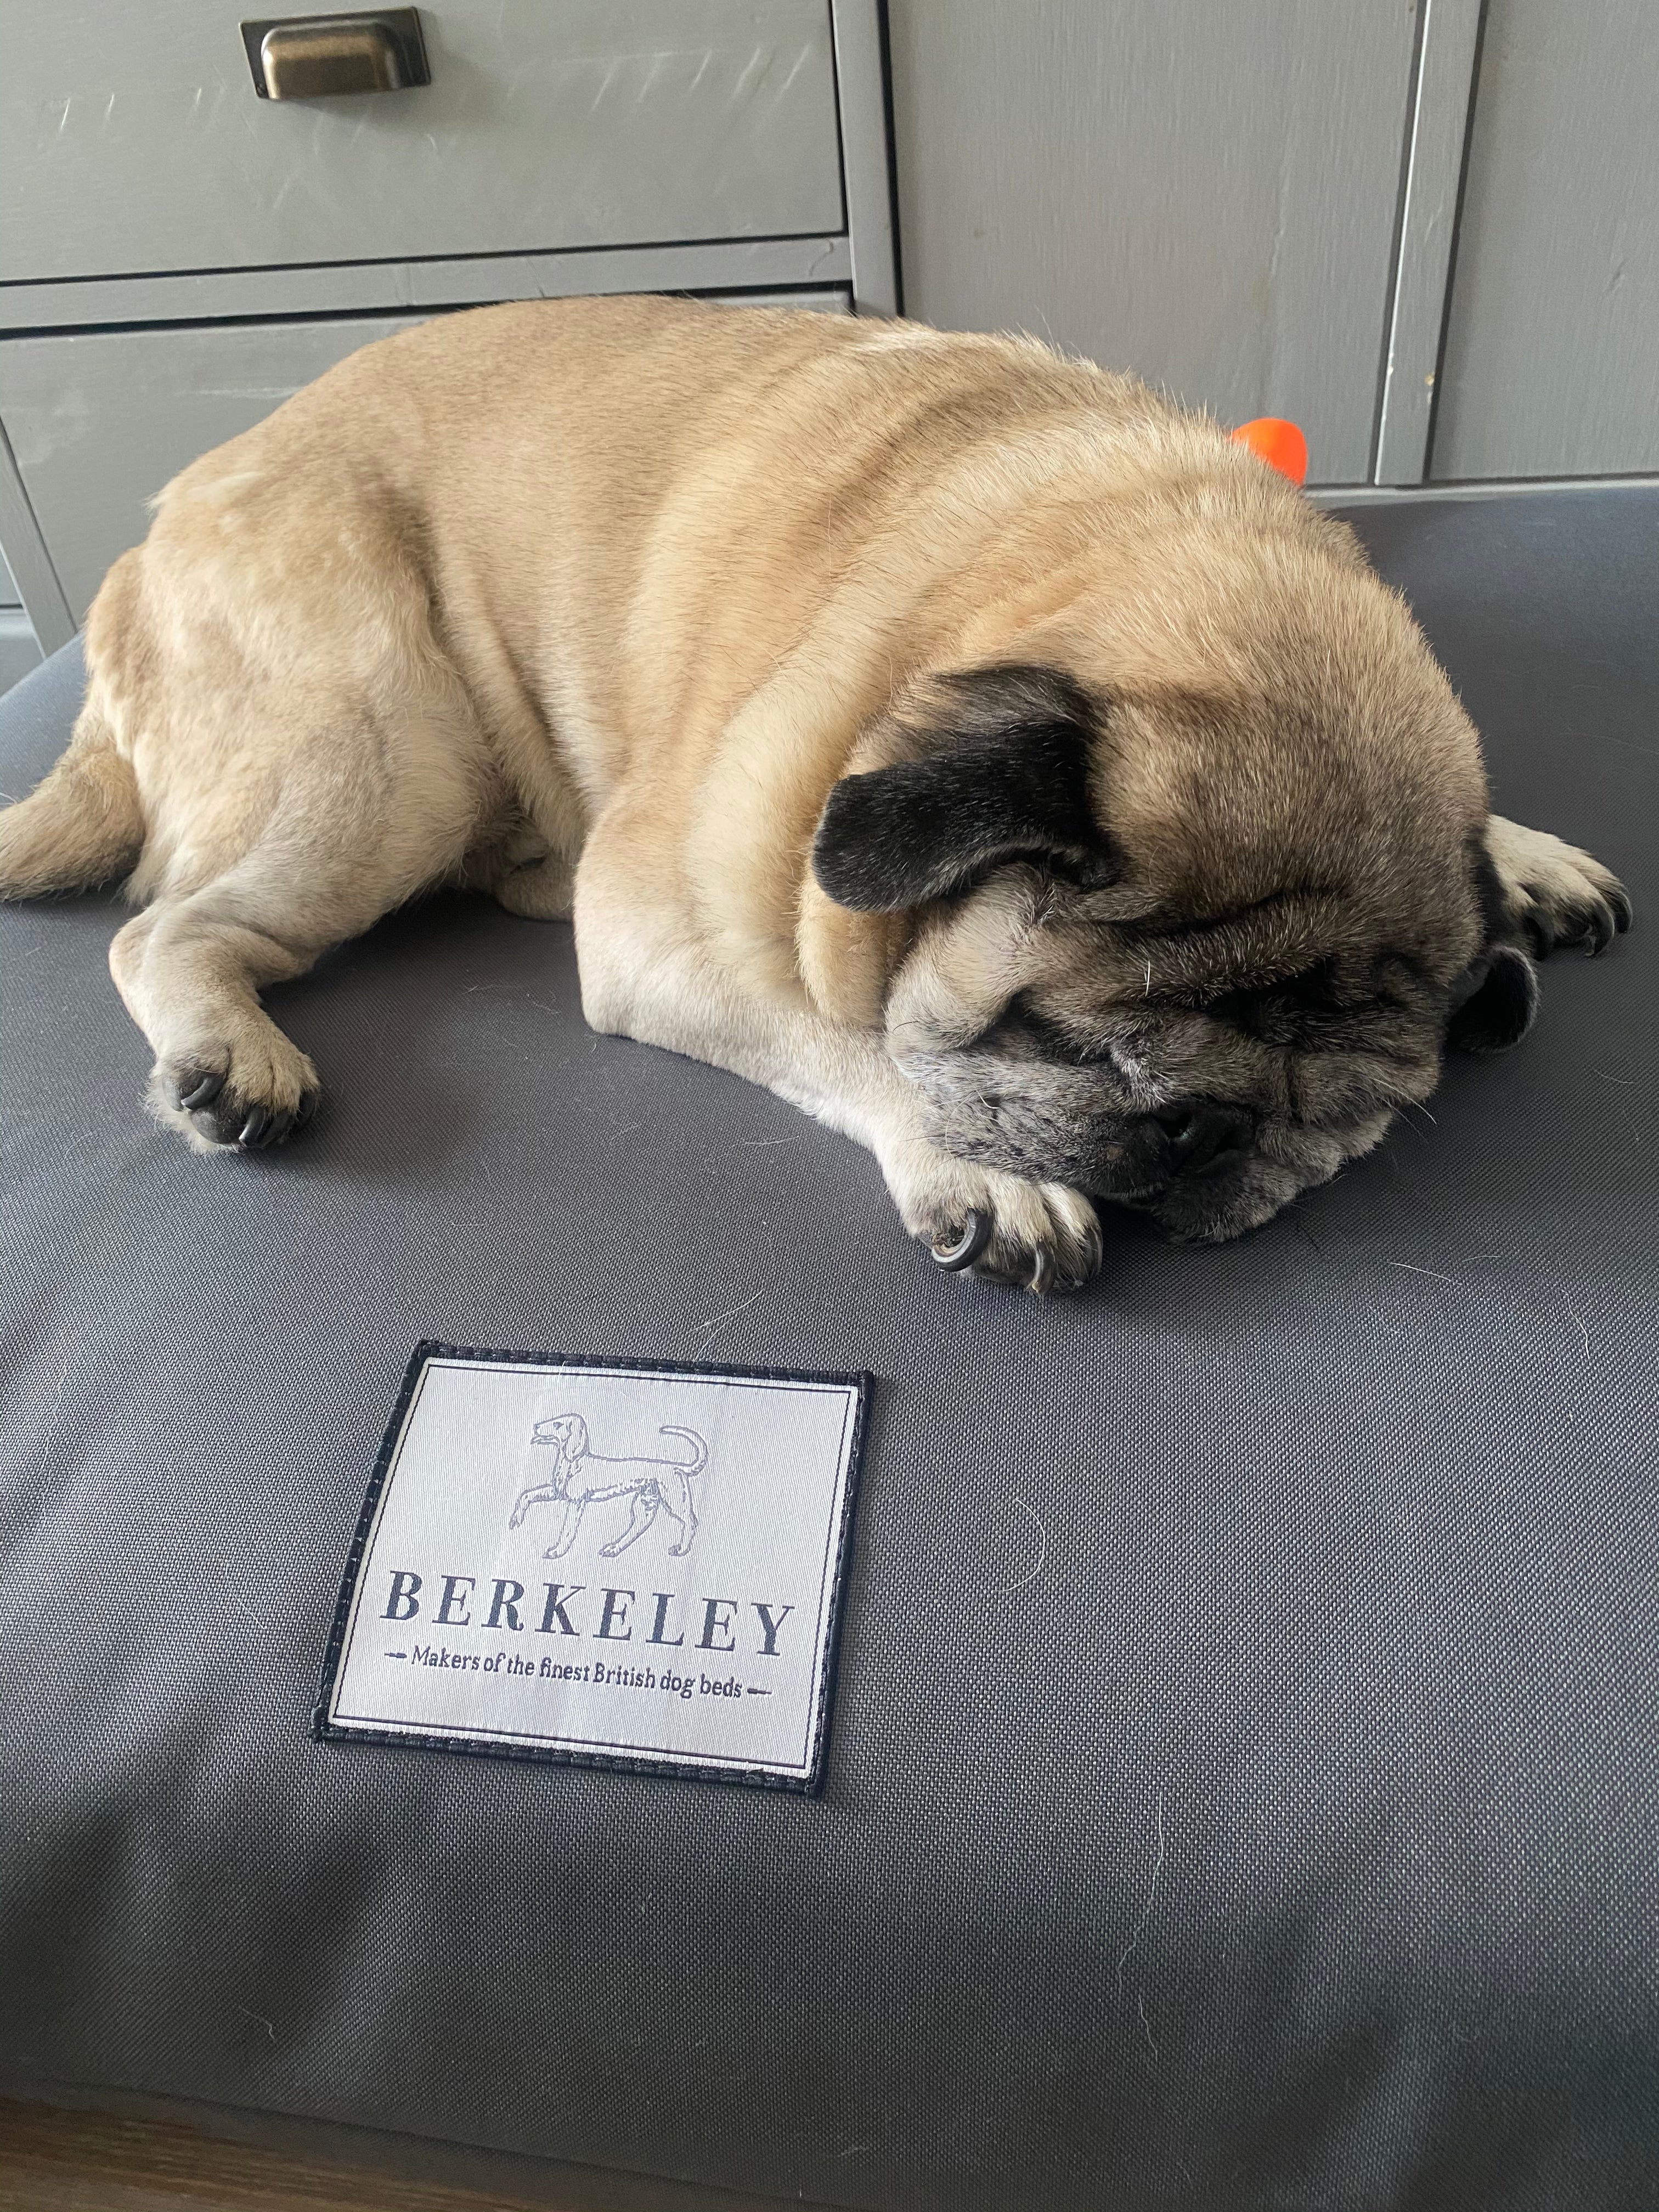 Orthopaedic Dog Bed Mattress by Berkeley